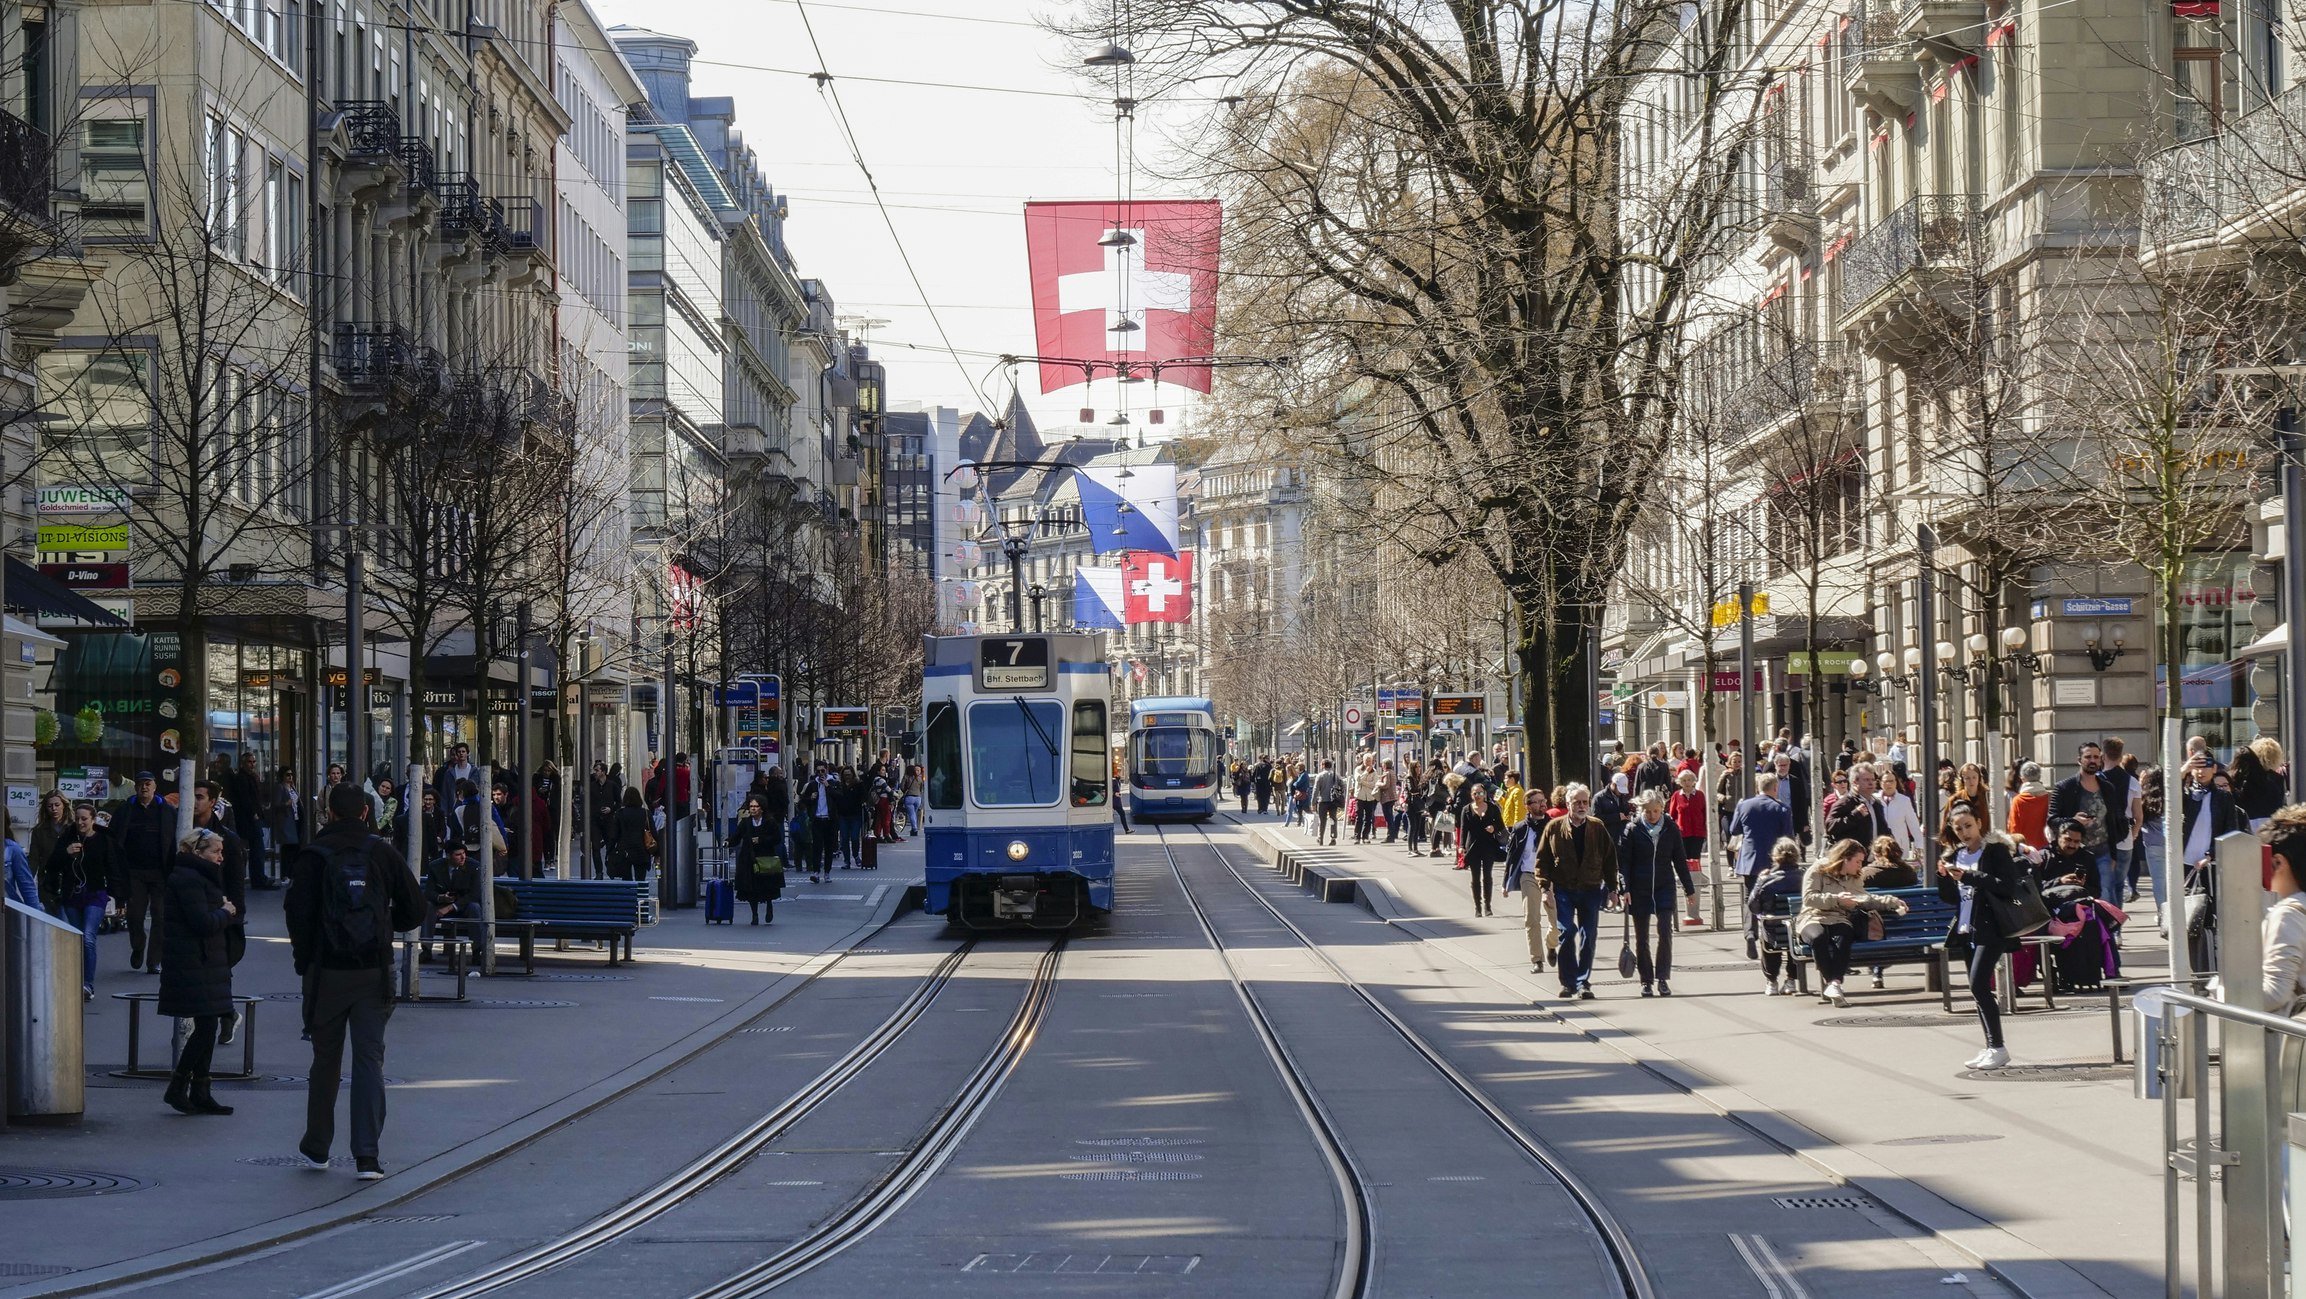 A tram on a busy shopping street in Zurich